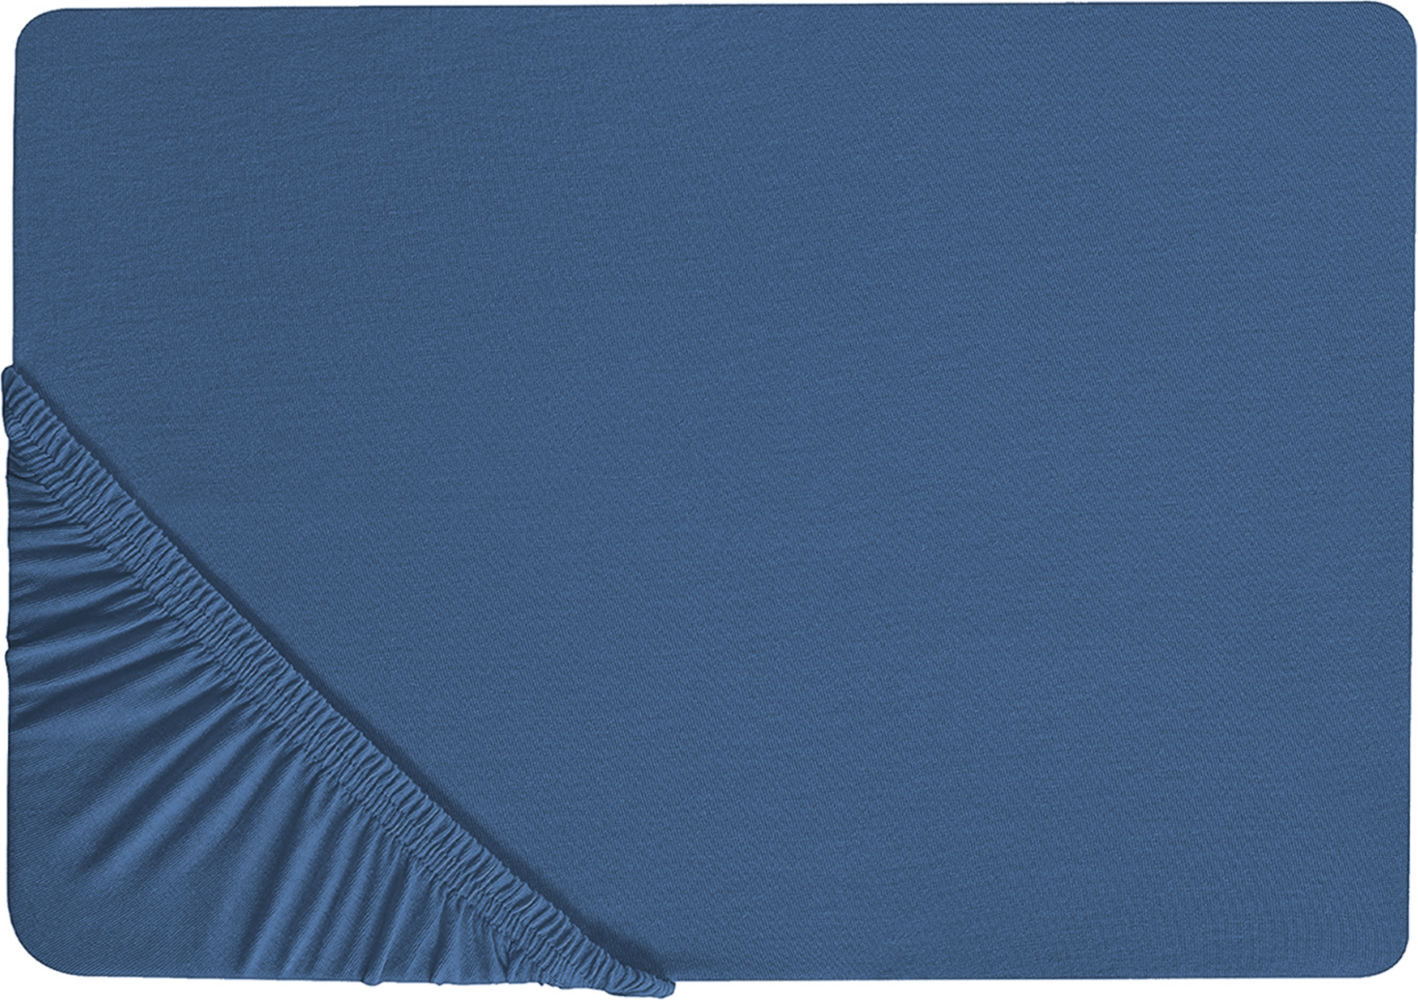 Spannbettlaken Baumwolle marineblau 200 x 200 cm JANBU Bild 1